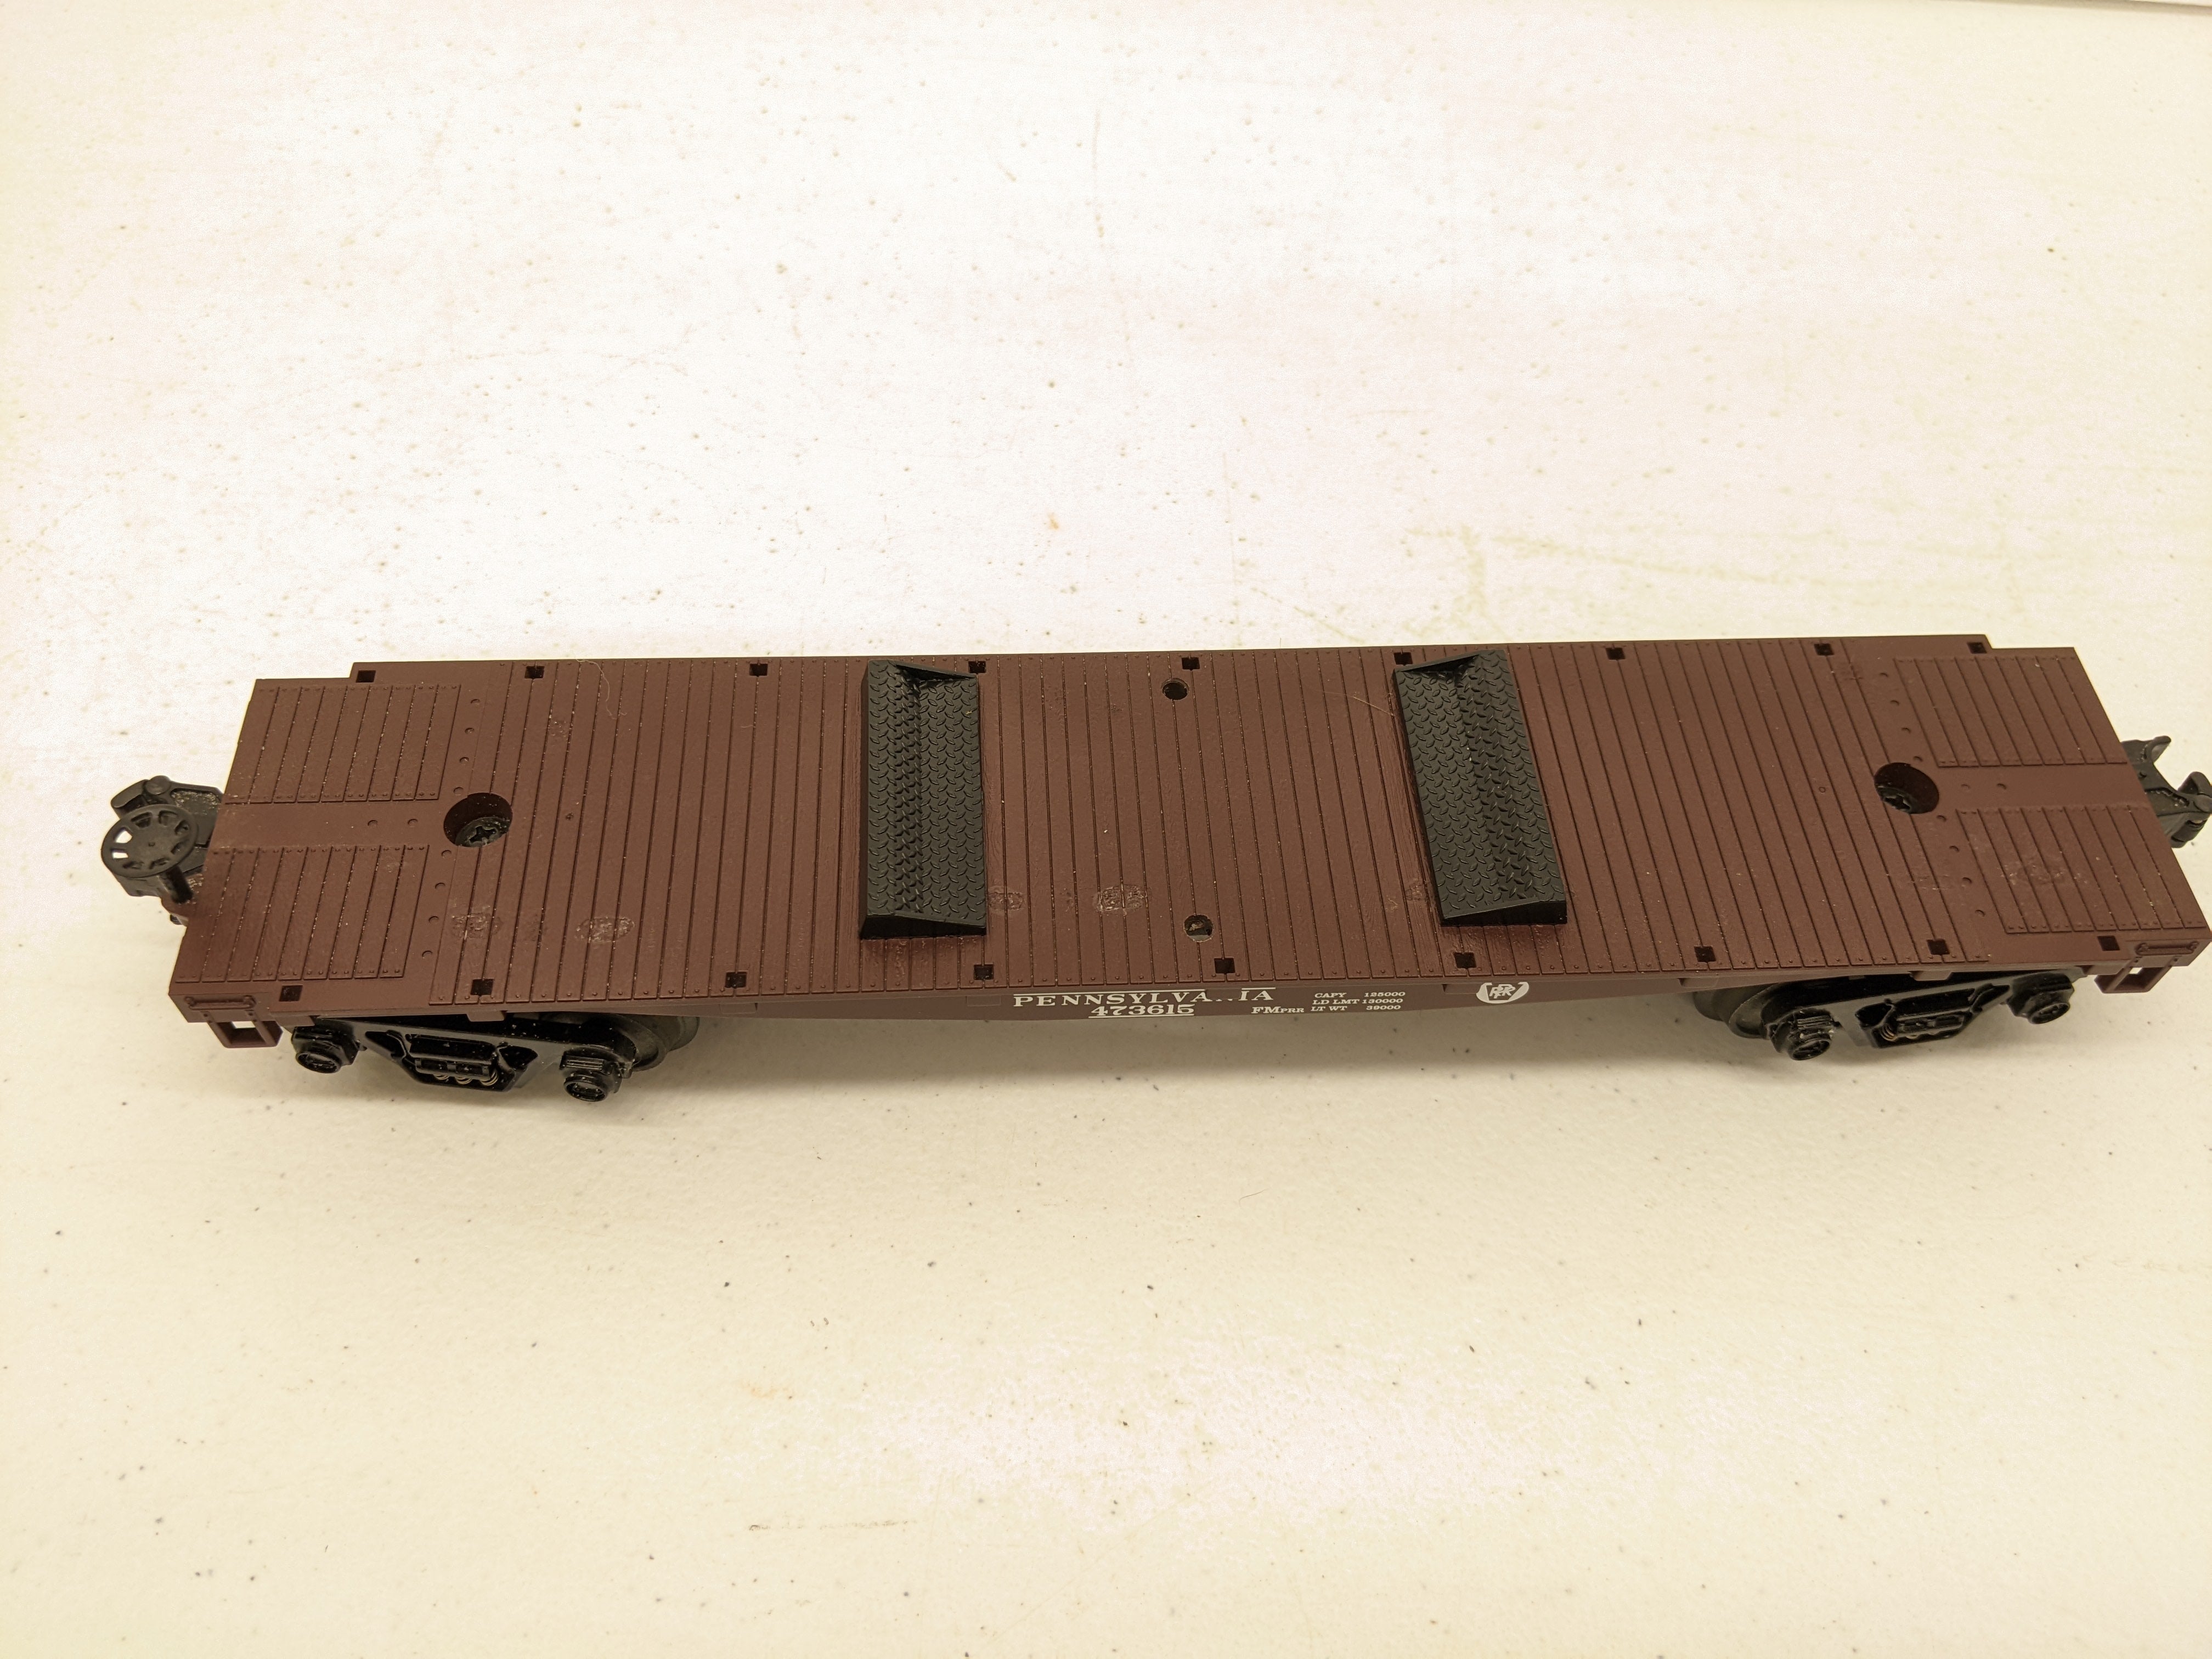 USED MTH Rail King 33-7605 O Scale, Flat Car, Pennsylvania #473615, Rugged Rails